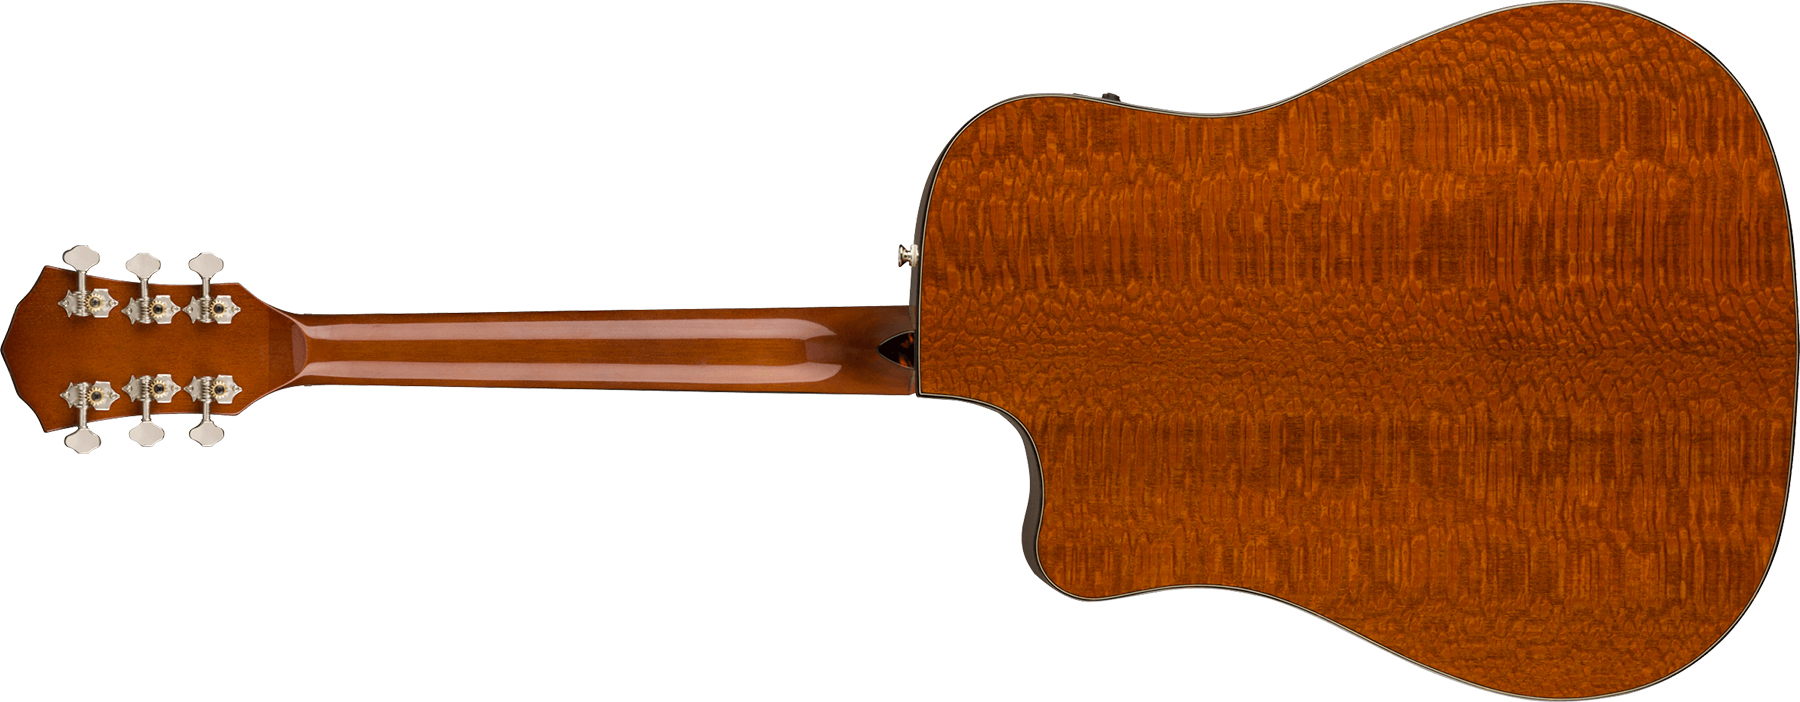 Fender Fa325ce Ltd Dreadnought Cw Erable Lacewood Lau - Moonlight Burst - Elektroakustische Gitarre - Variation 1